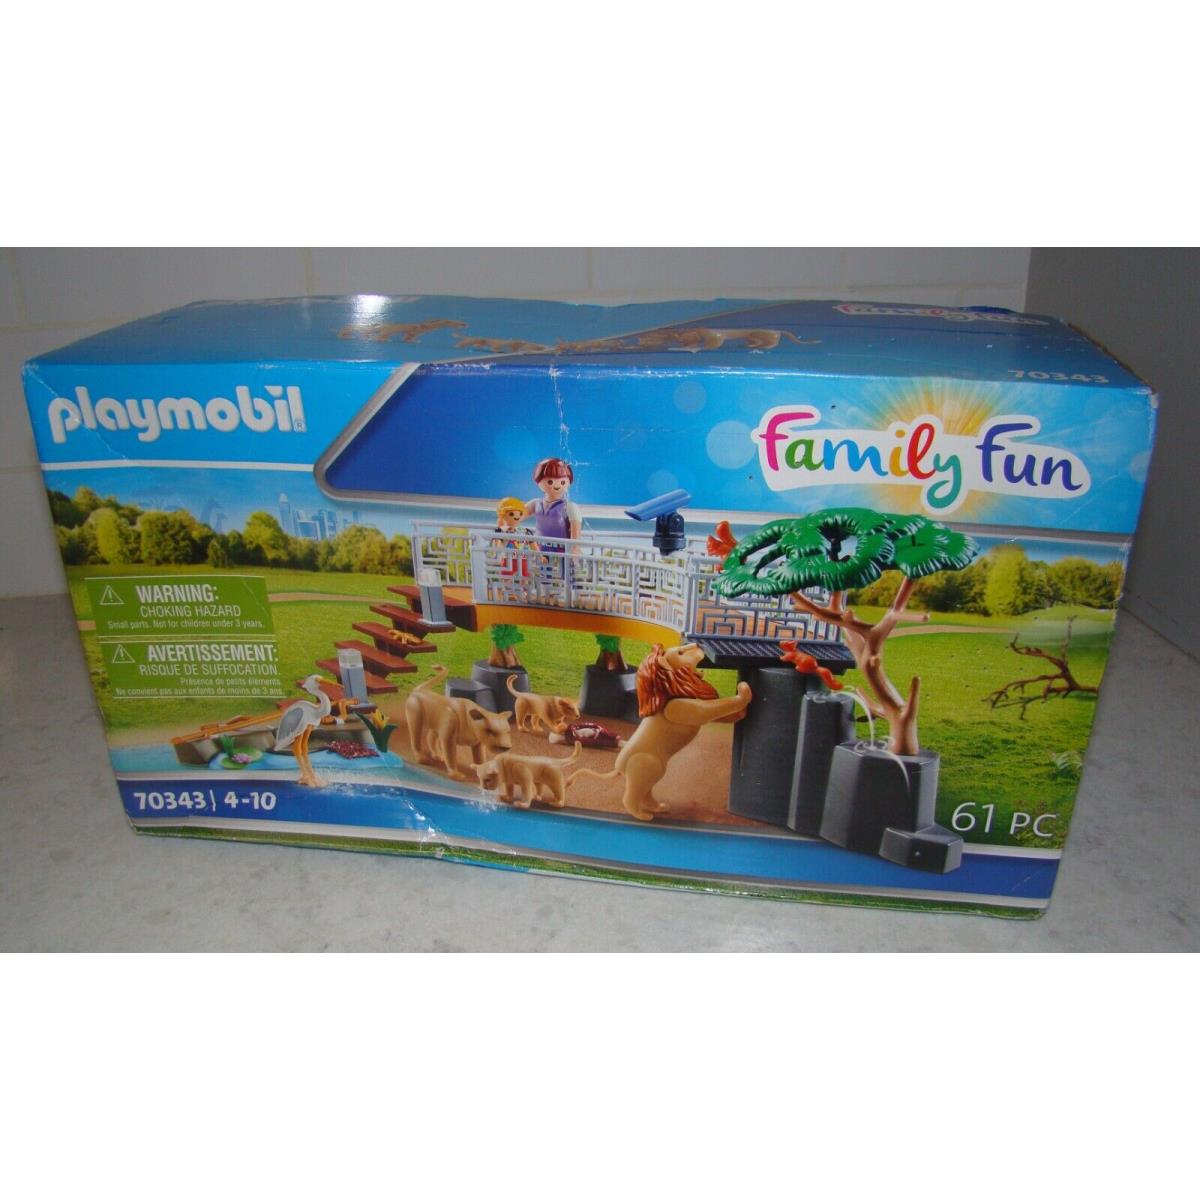 Playmobil Outdoor Lion Enclosure Playset 70343 61 Pieces